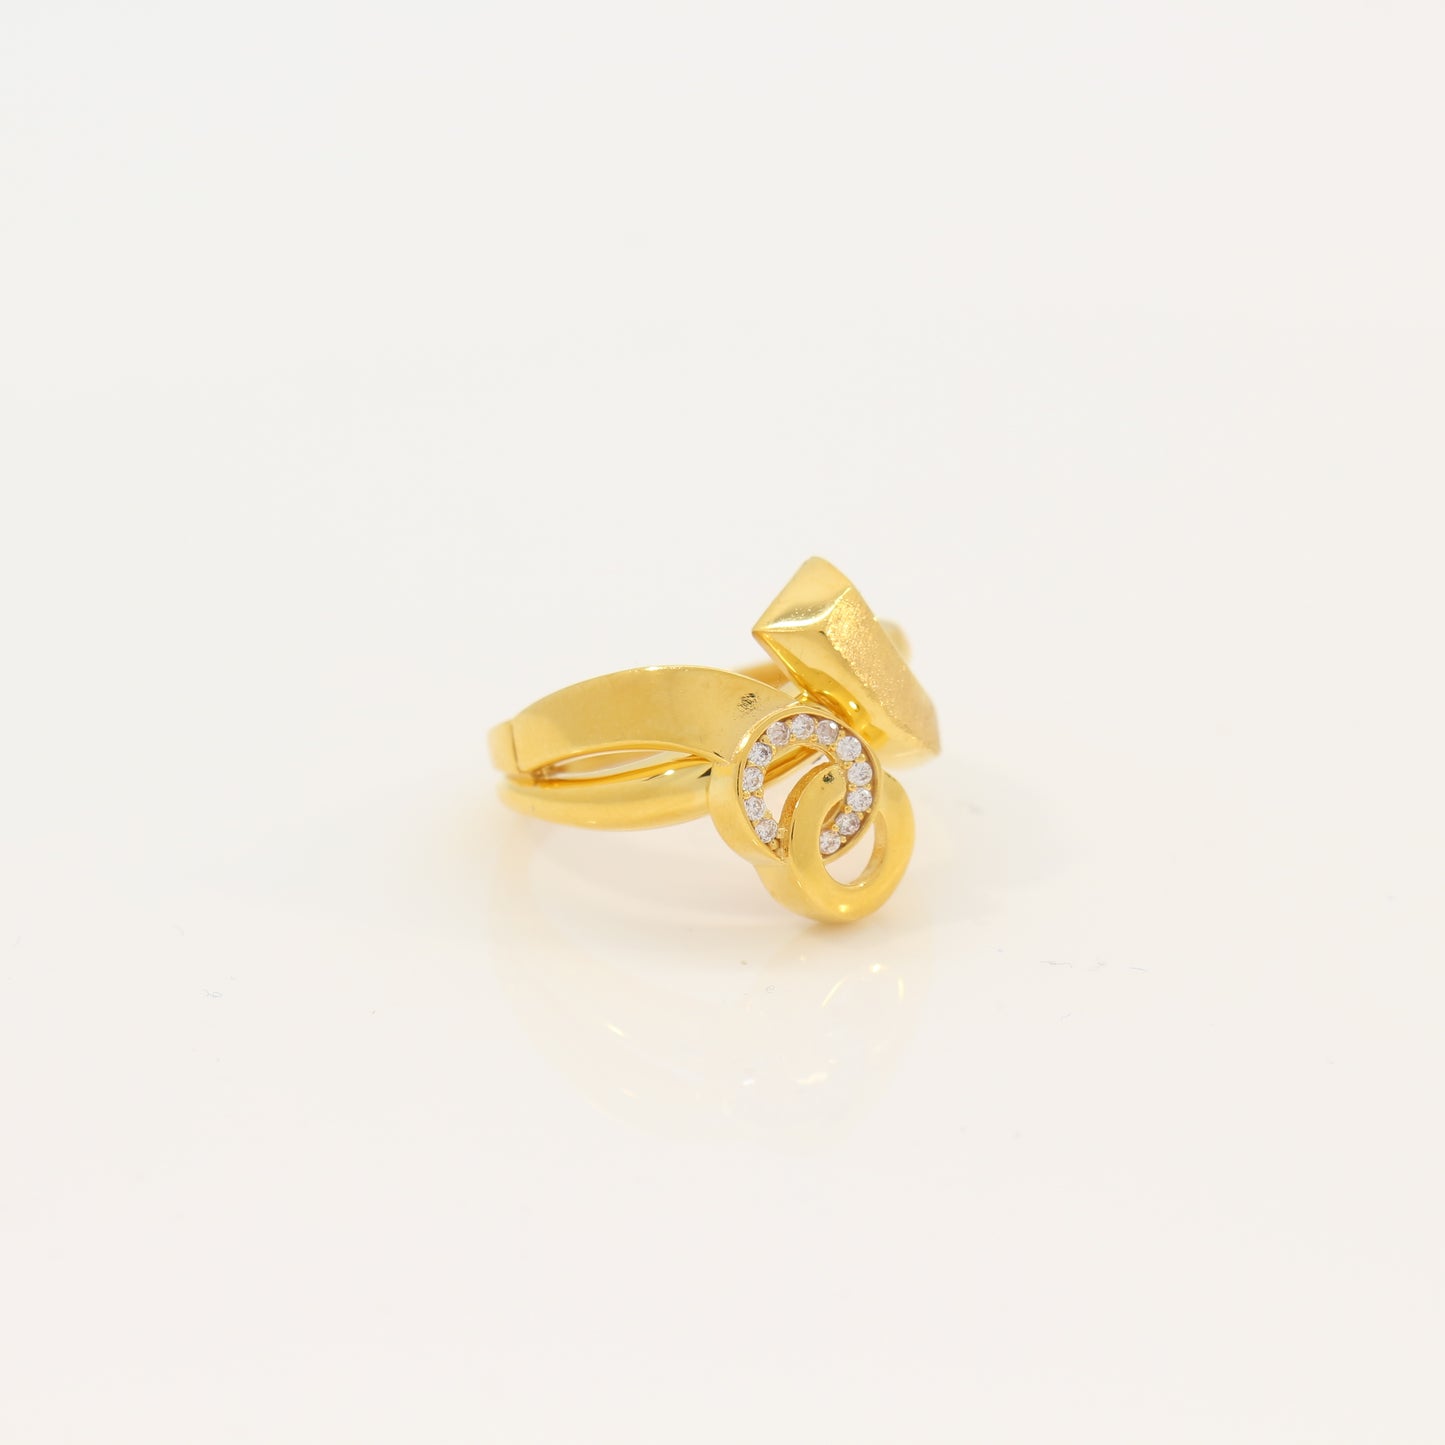 21K Gold Ring (size 7.5)